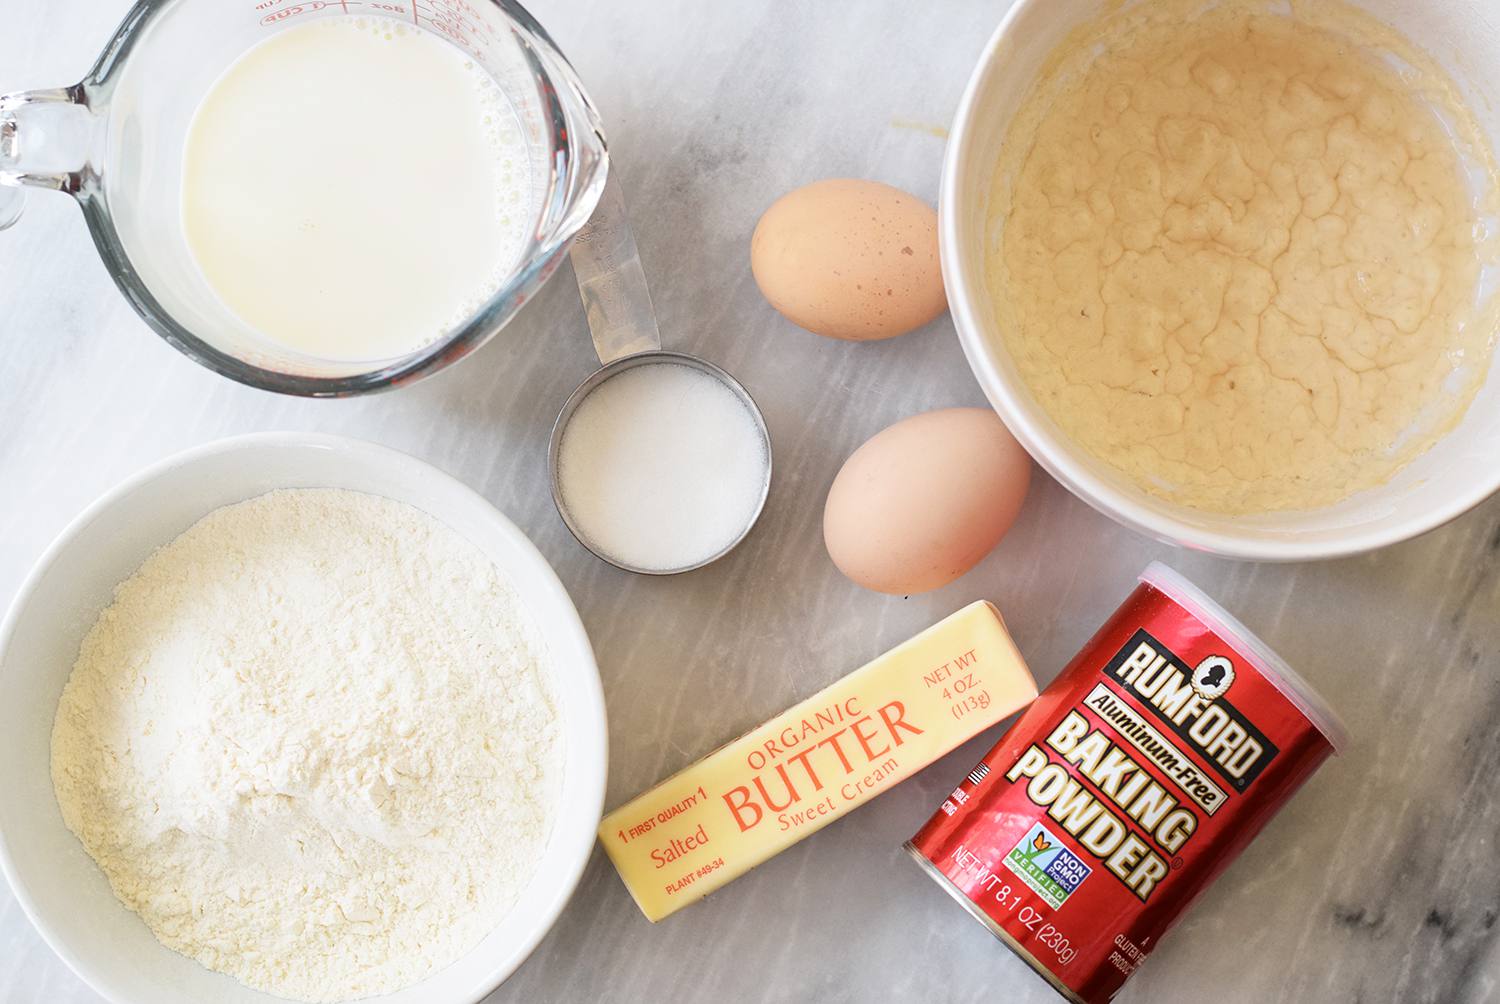 Ingredients for Sourdough Pancakes